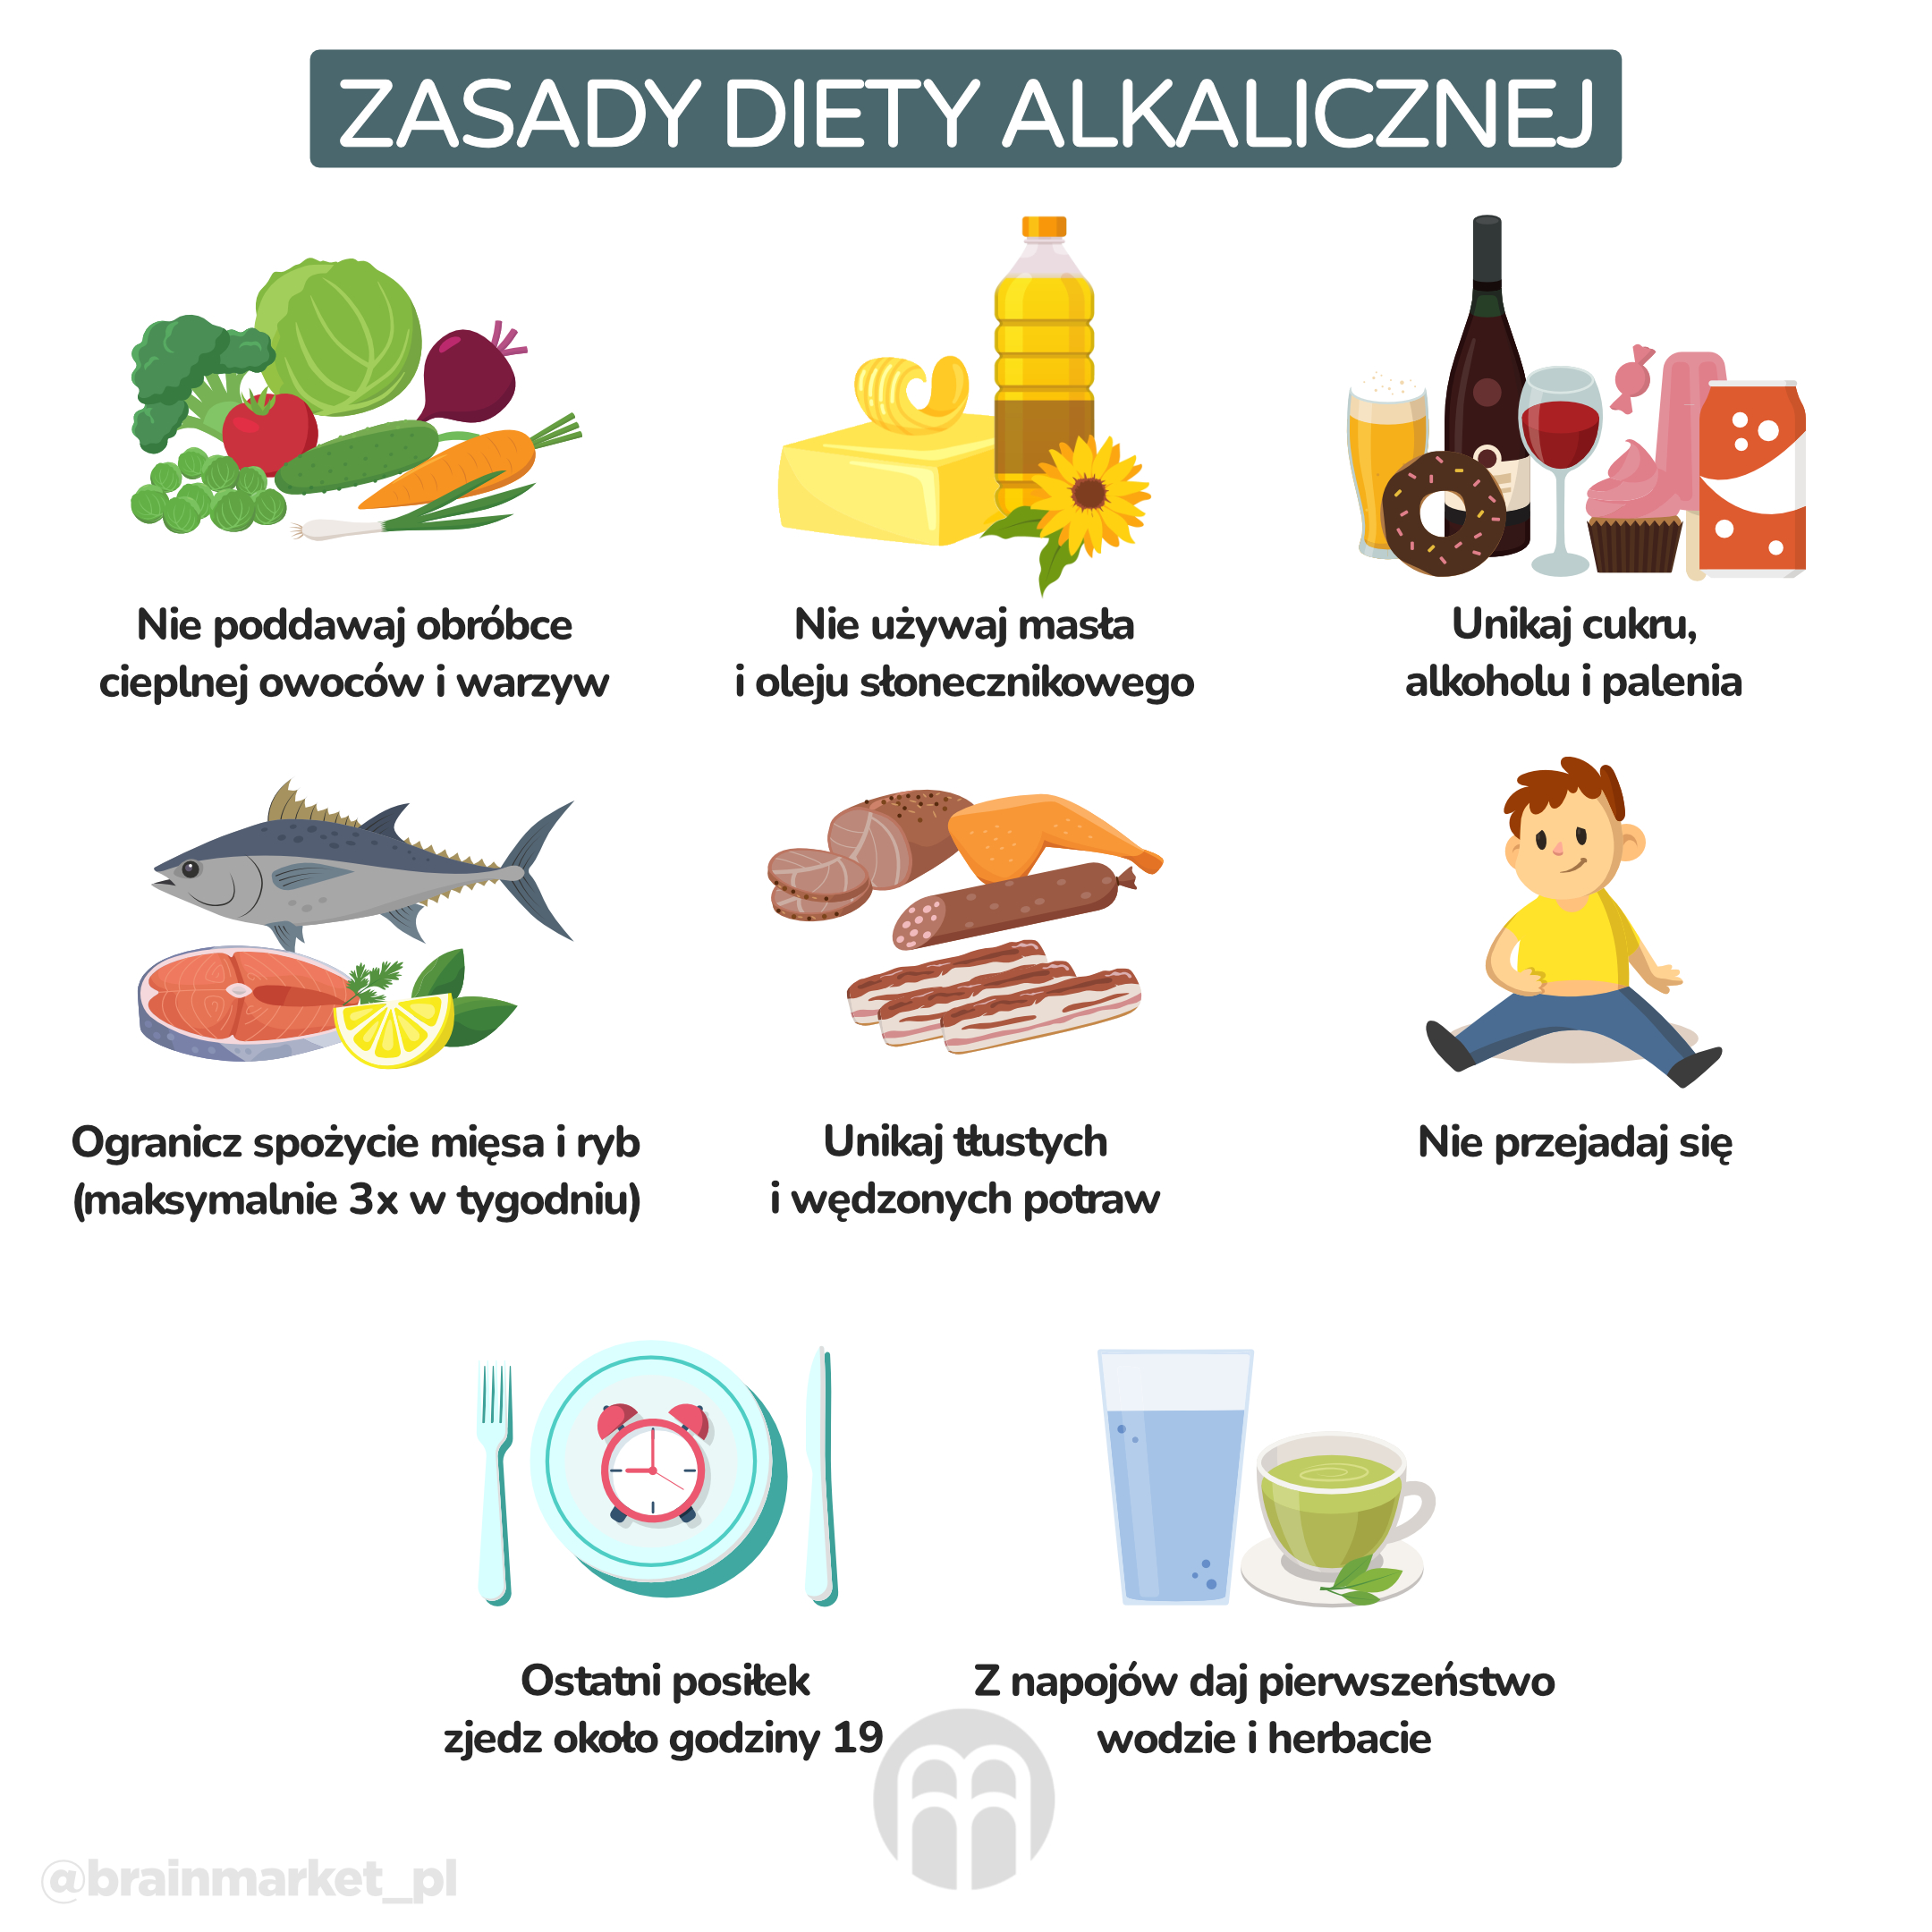 zasady alkalicke diety_infografika_pl